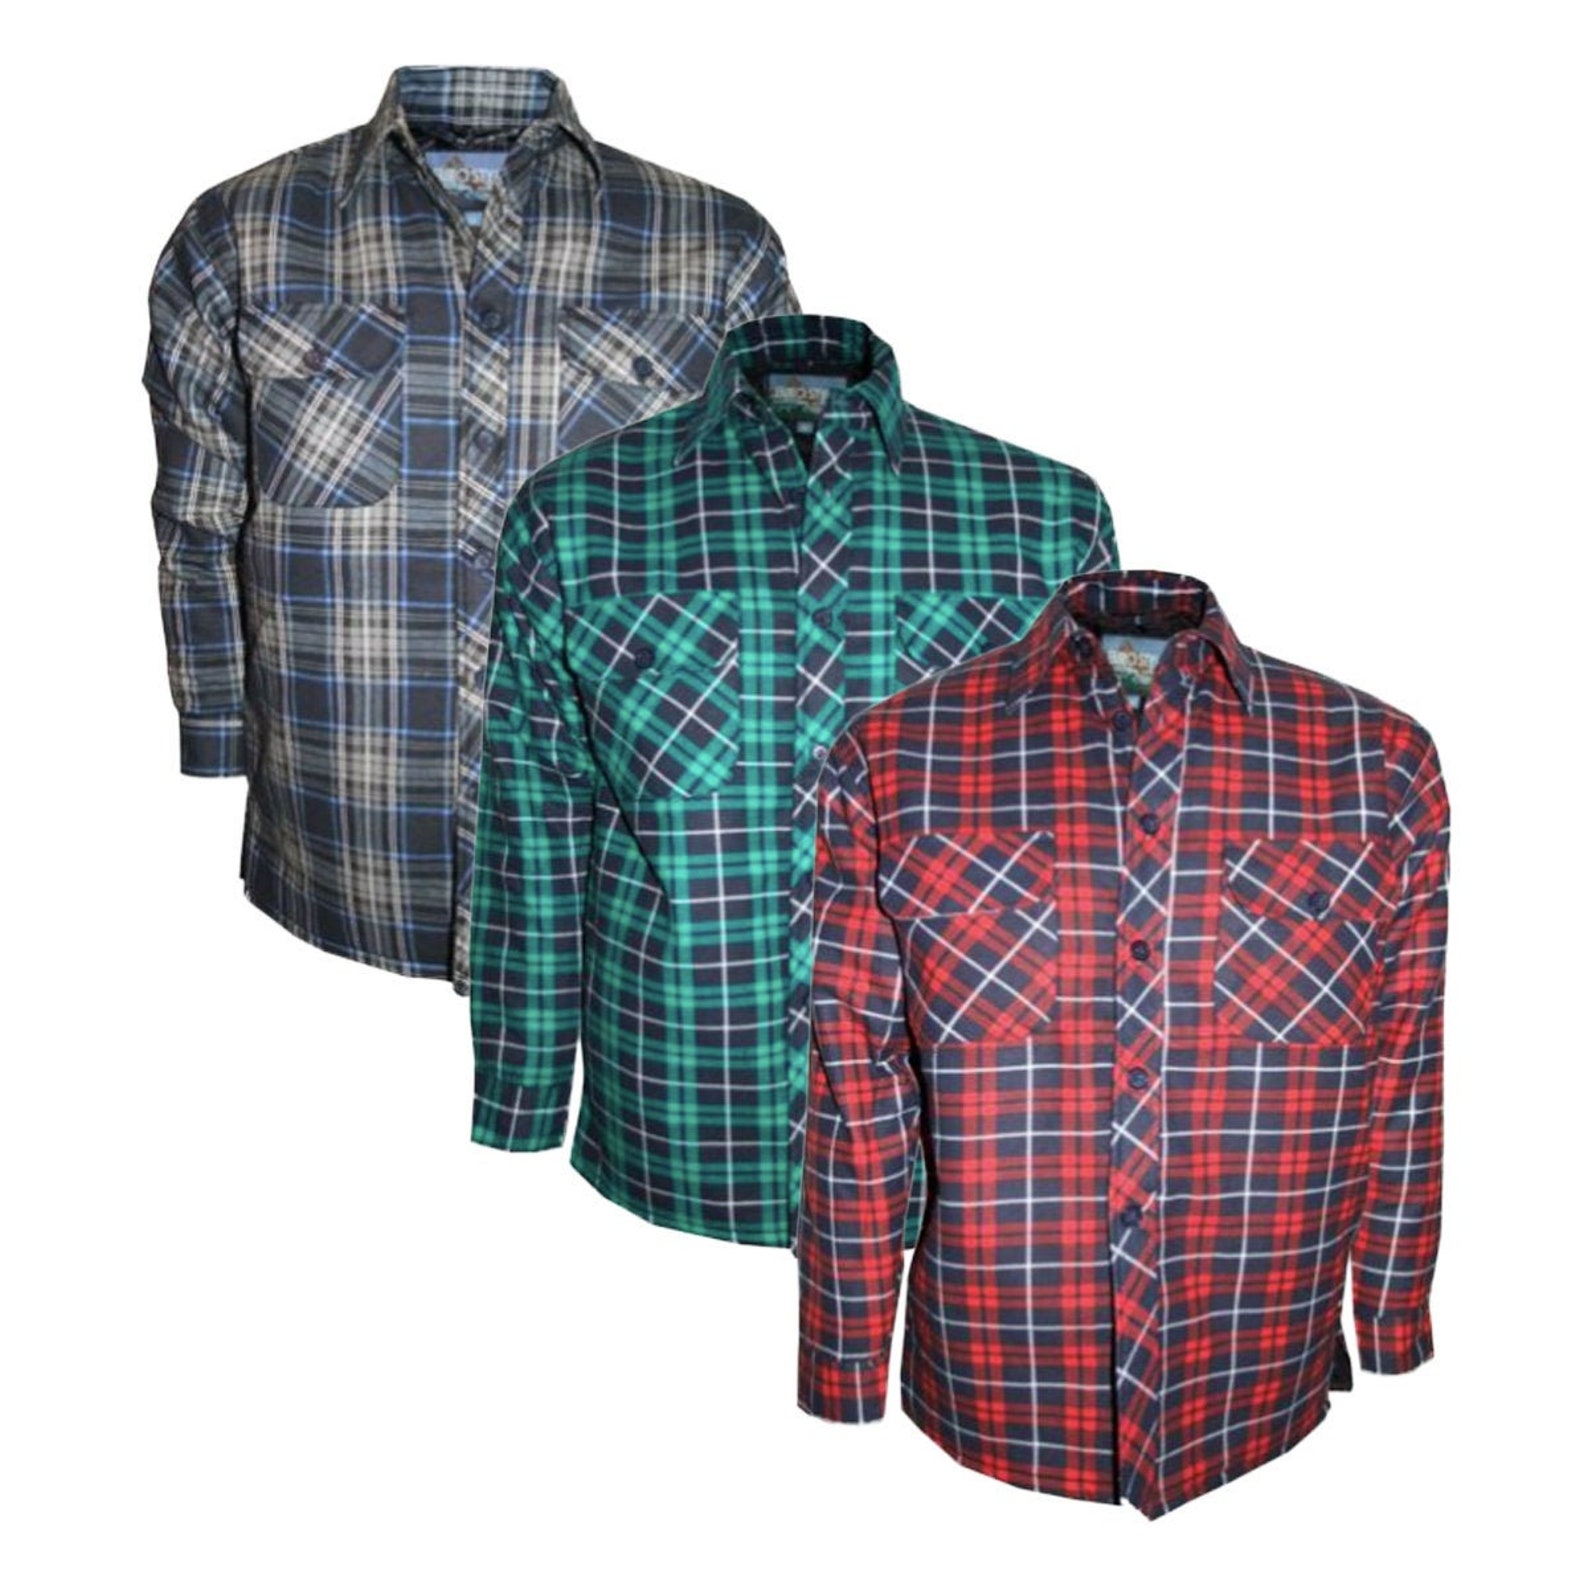 Eurostyle Men's Padded Work Shirts Quilted Cotton Lumberjack Shirt M ...